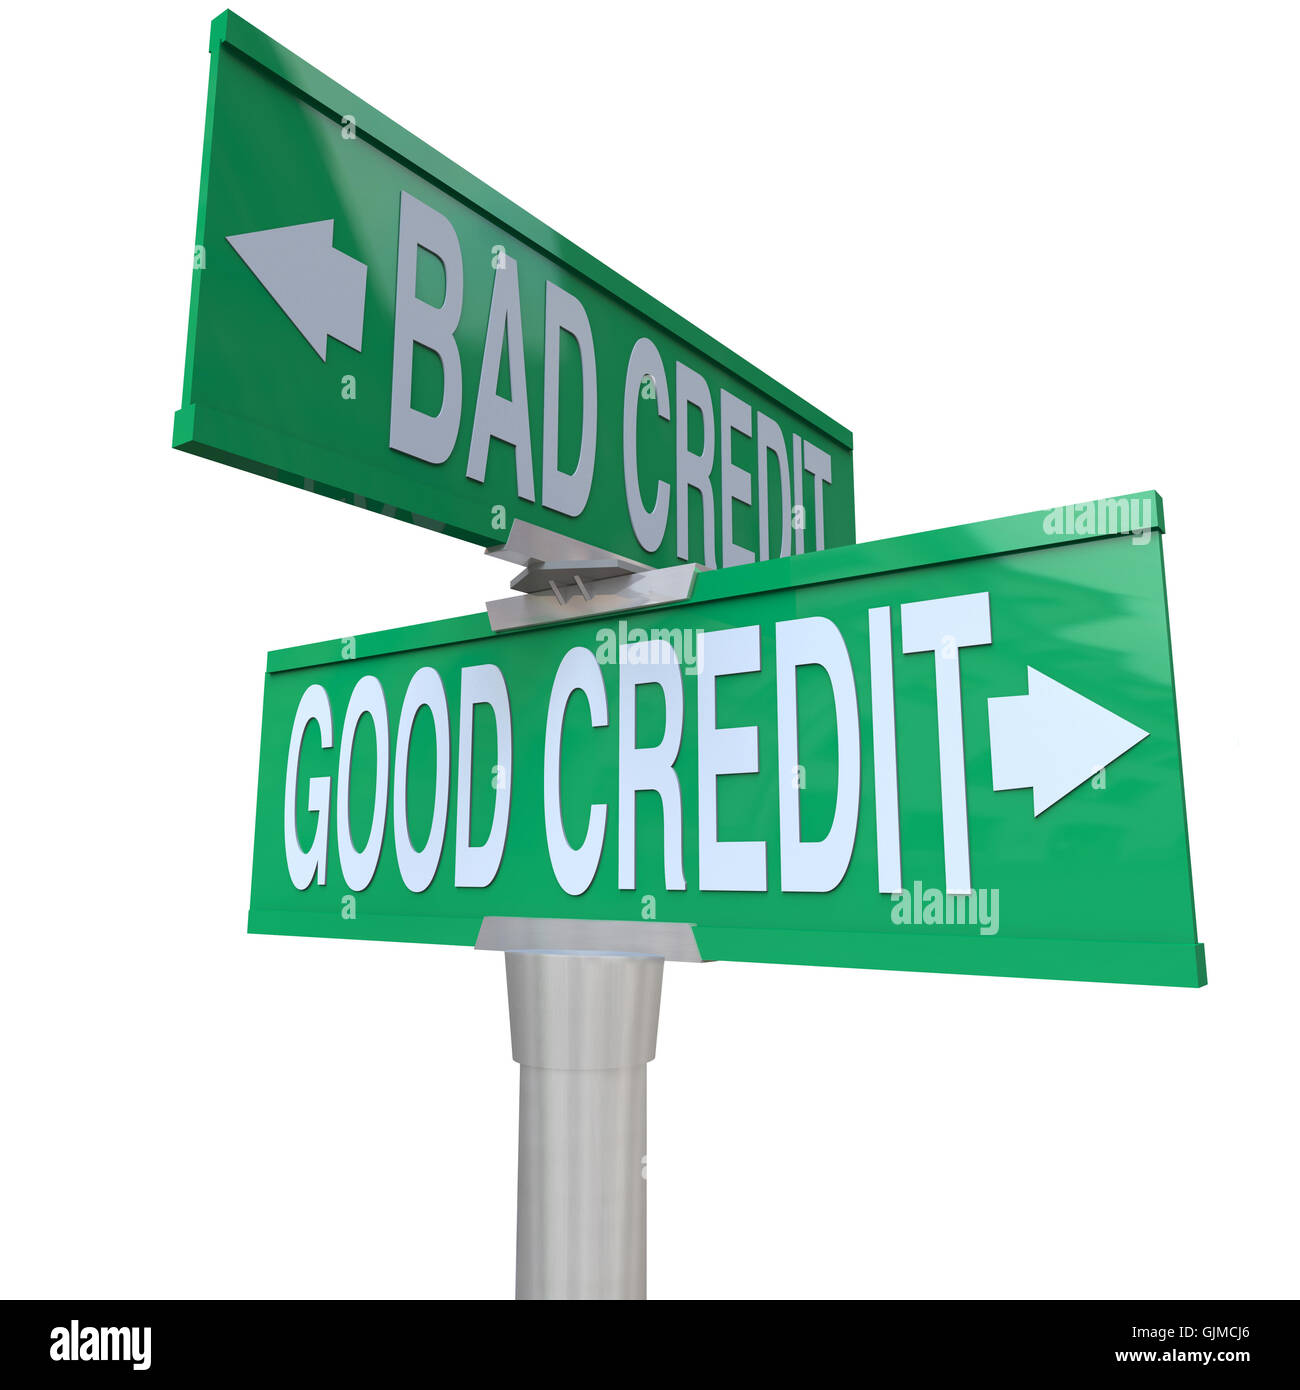 Good vs Bad Credit - Two-Way Street Sign Stock Photo